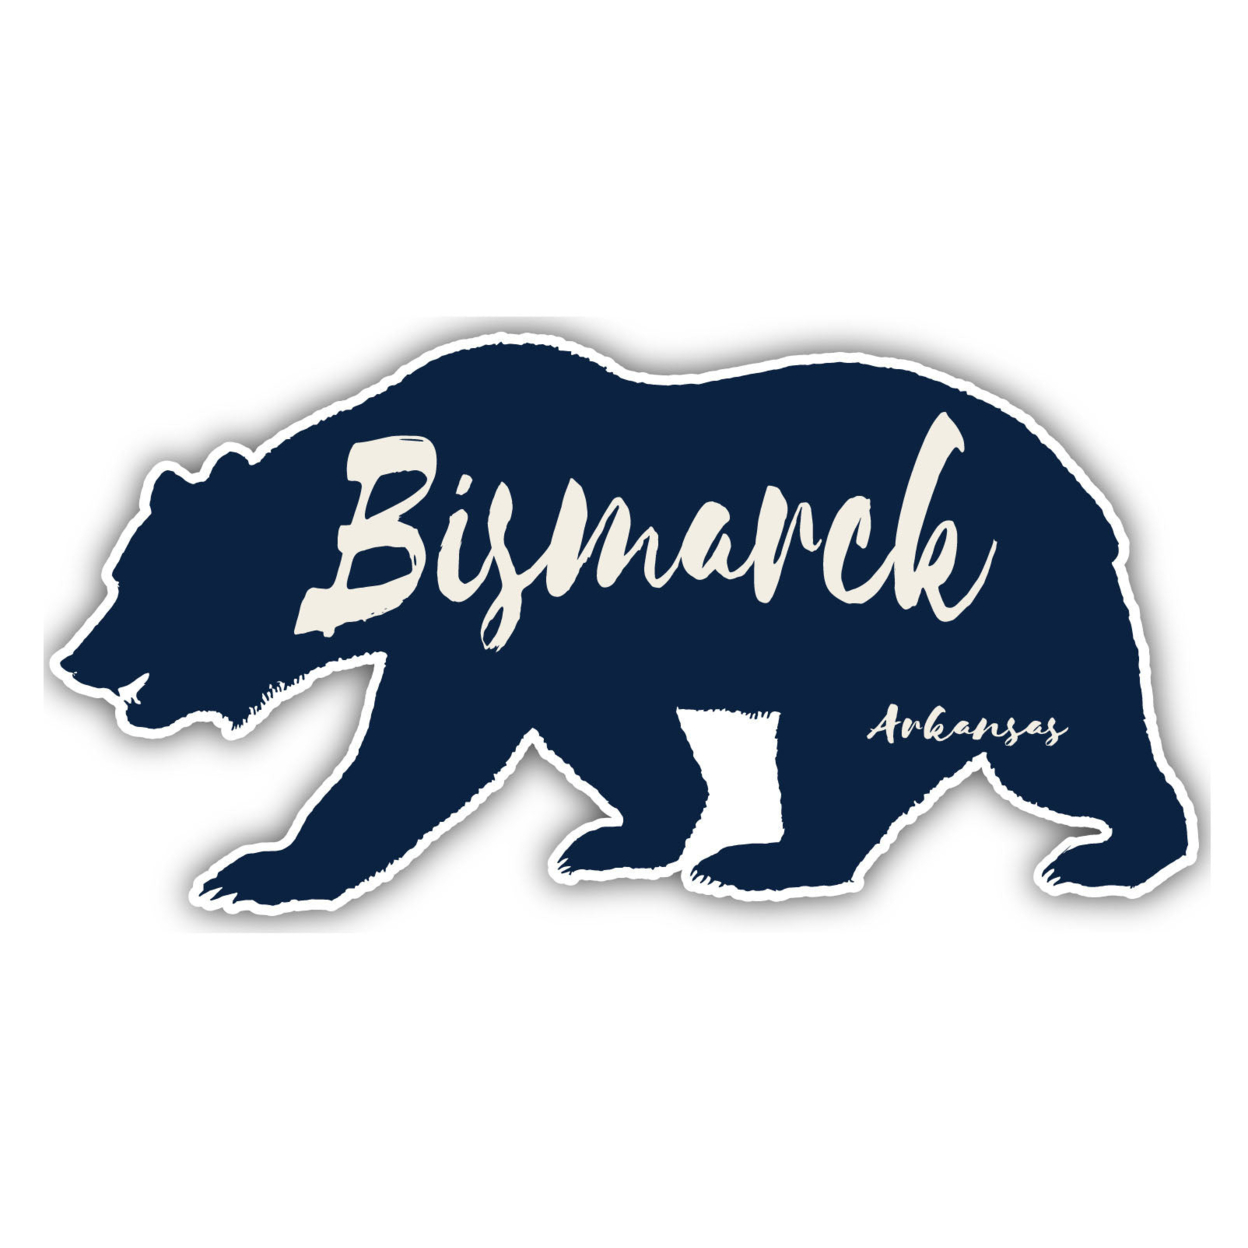 Bismarck Arkansas Souvenir Decorative Stickers (Choose Theme And Size) - 4-Pack, 6-Inch, Bear